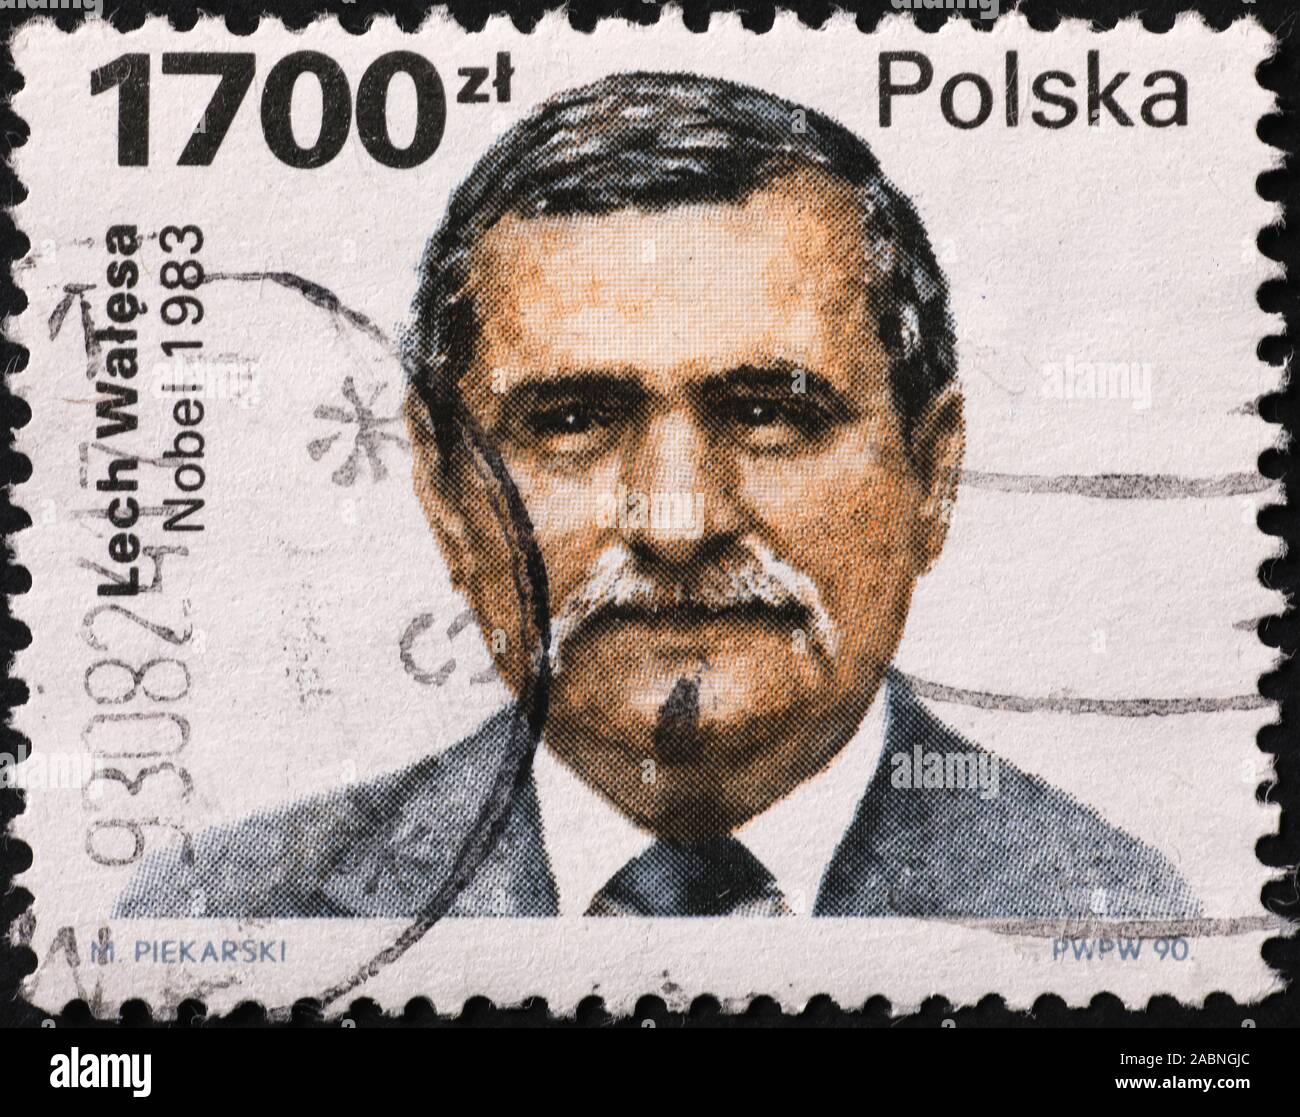 Portrait of Lech Walesa on polish postage stamp Stock Photo